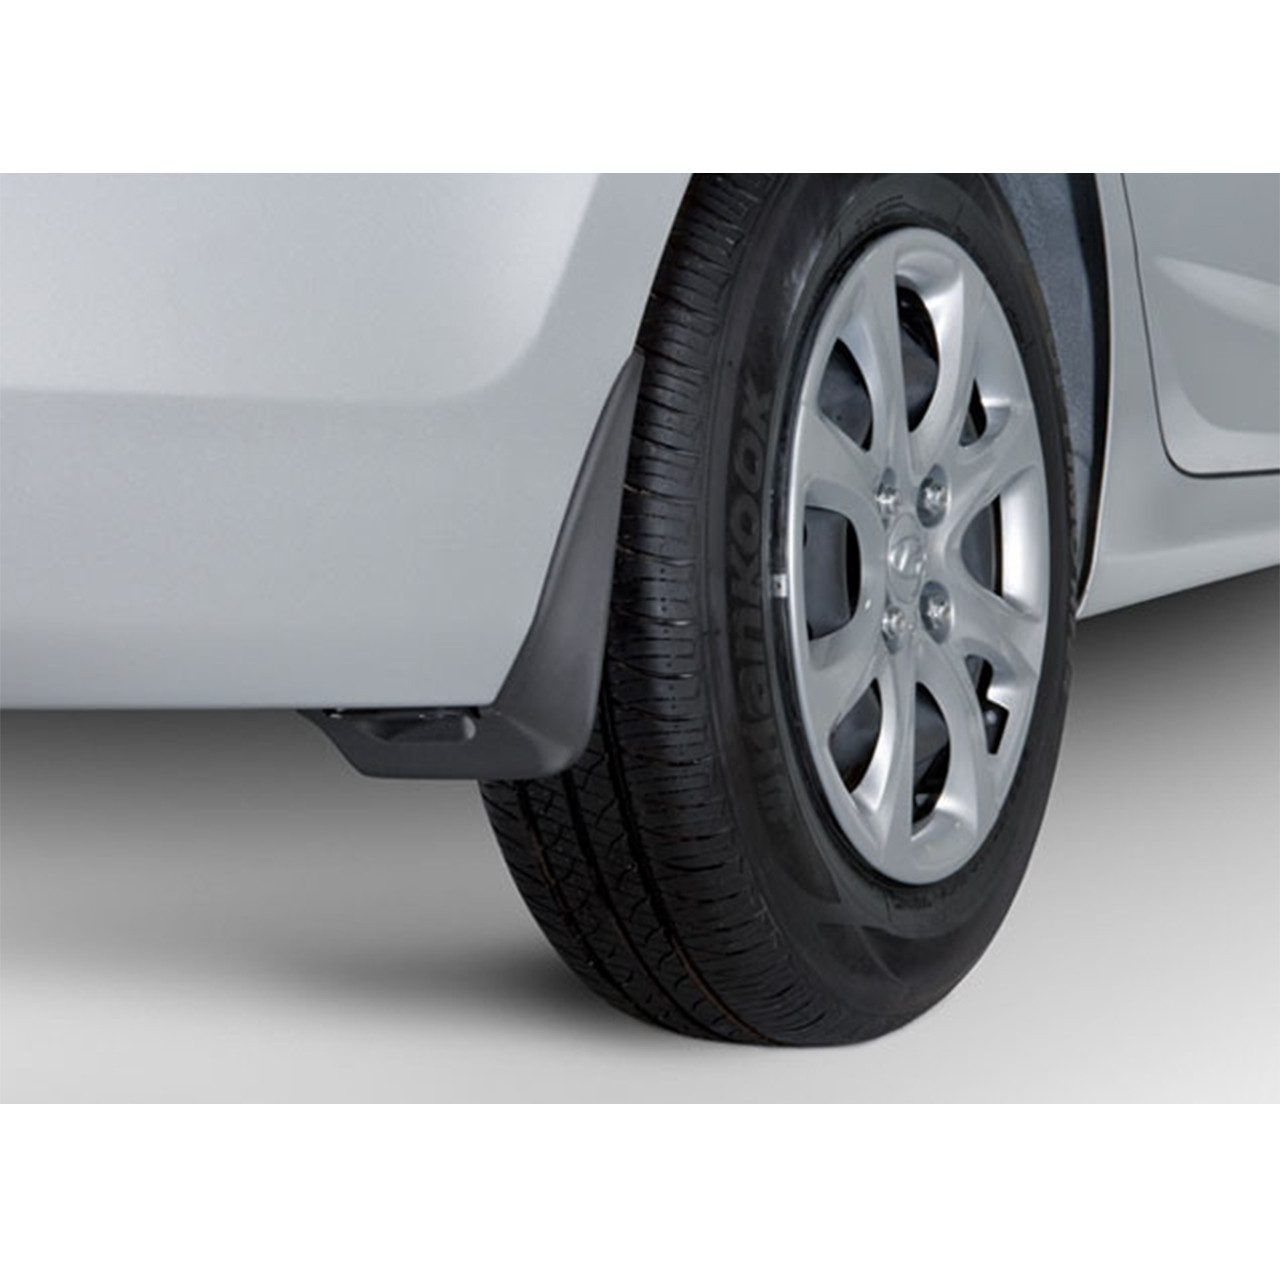 For Hyundai Ioniq 5 2022 Mudguards Car Accessories Protector Front